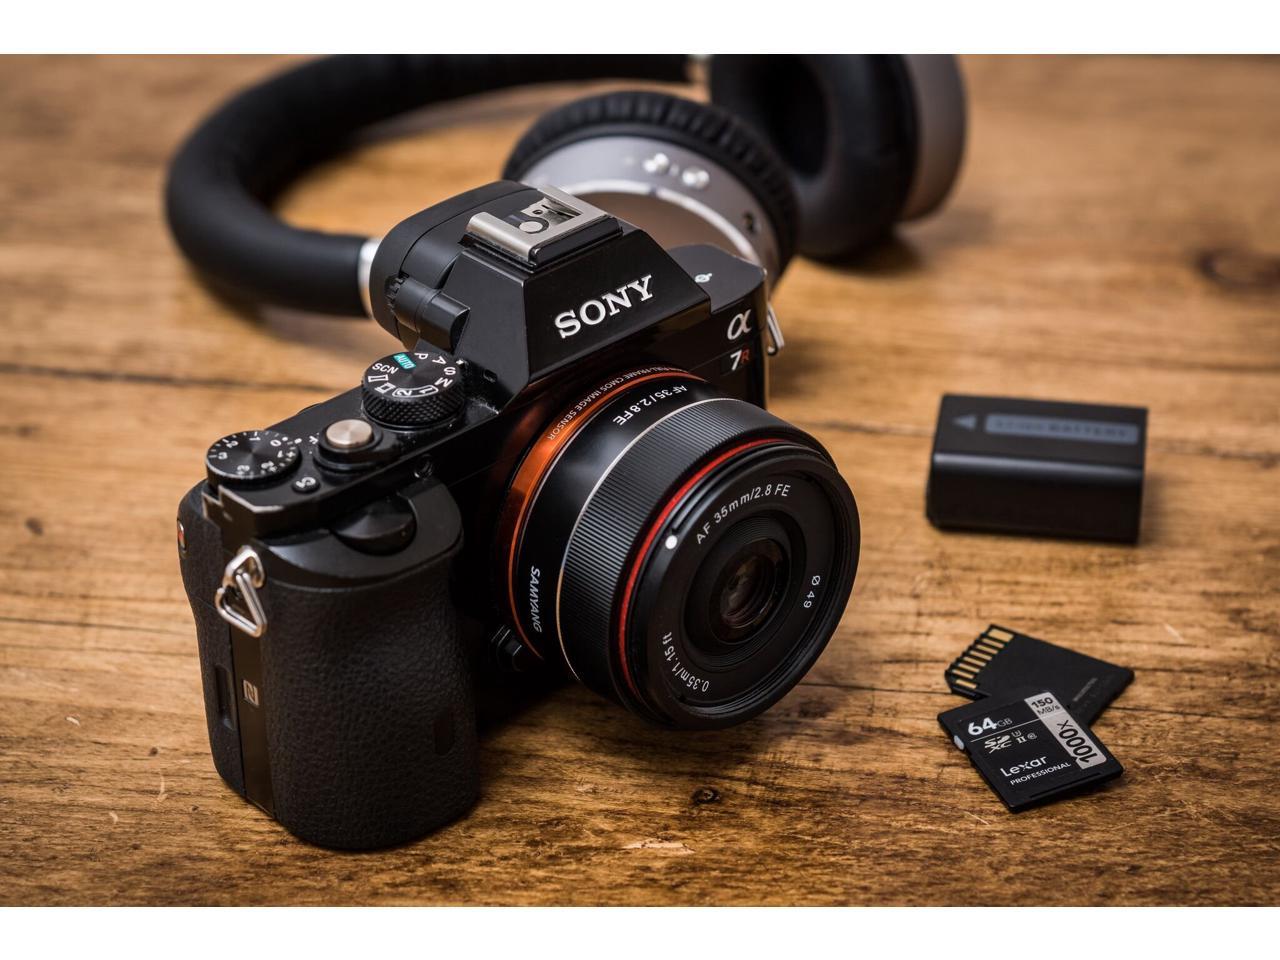 Rokinon 35mm f/2.8 (IO35AF-E) Ultra Compact Wide Angle Lens for Sony E Mount, Black